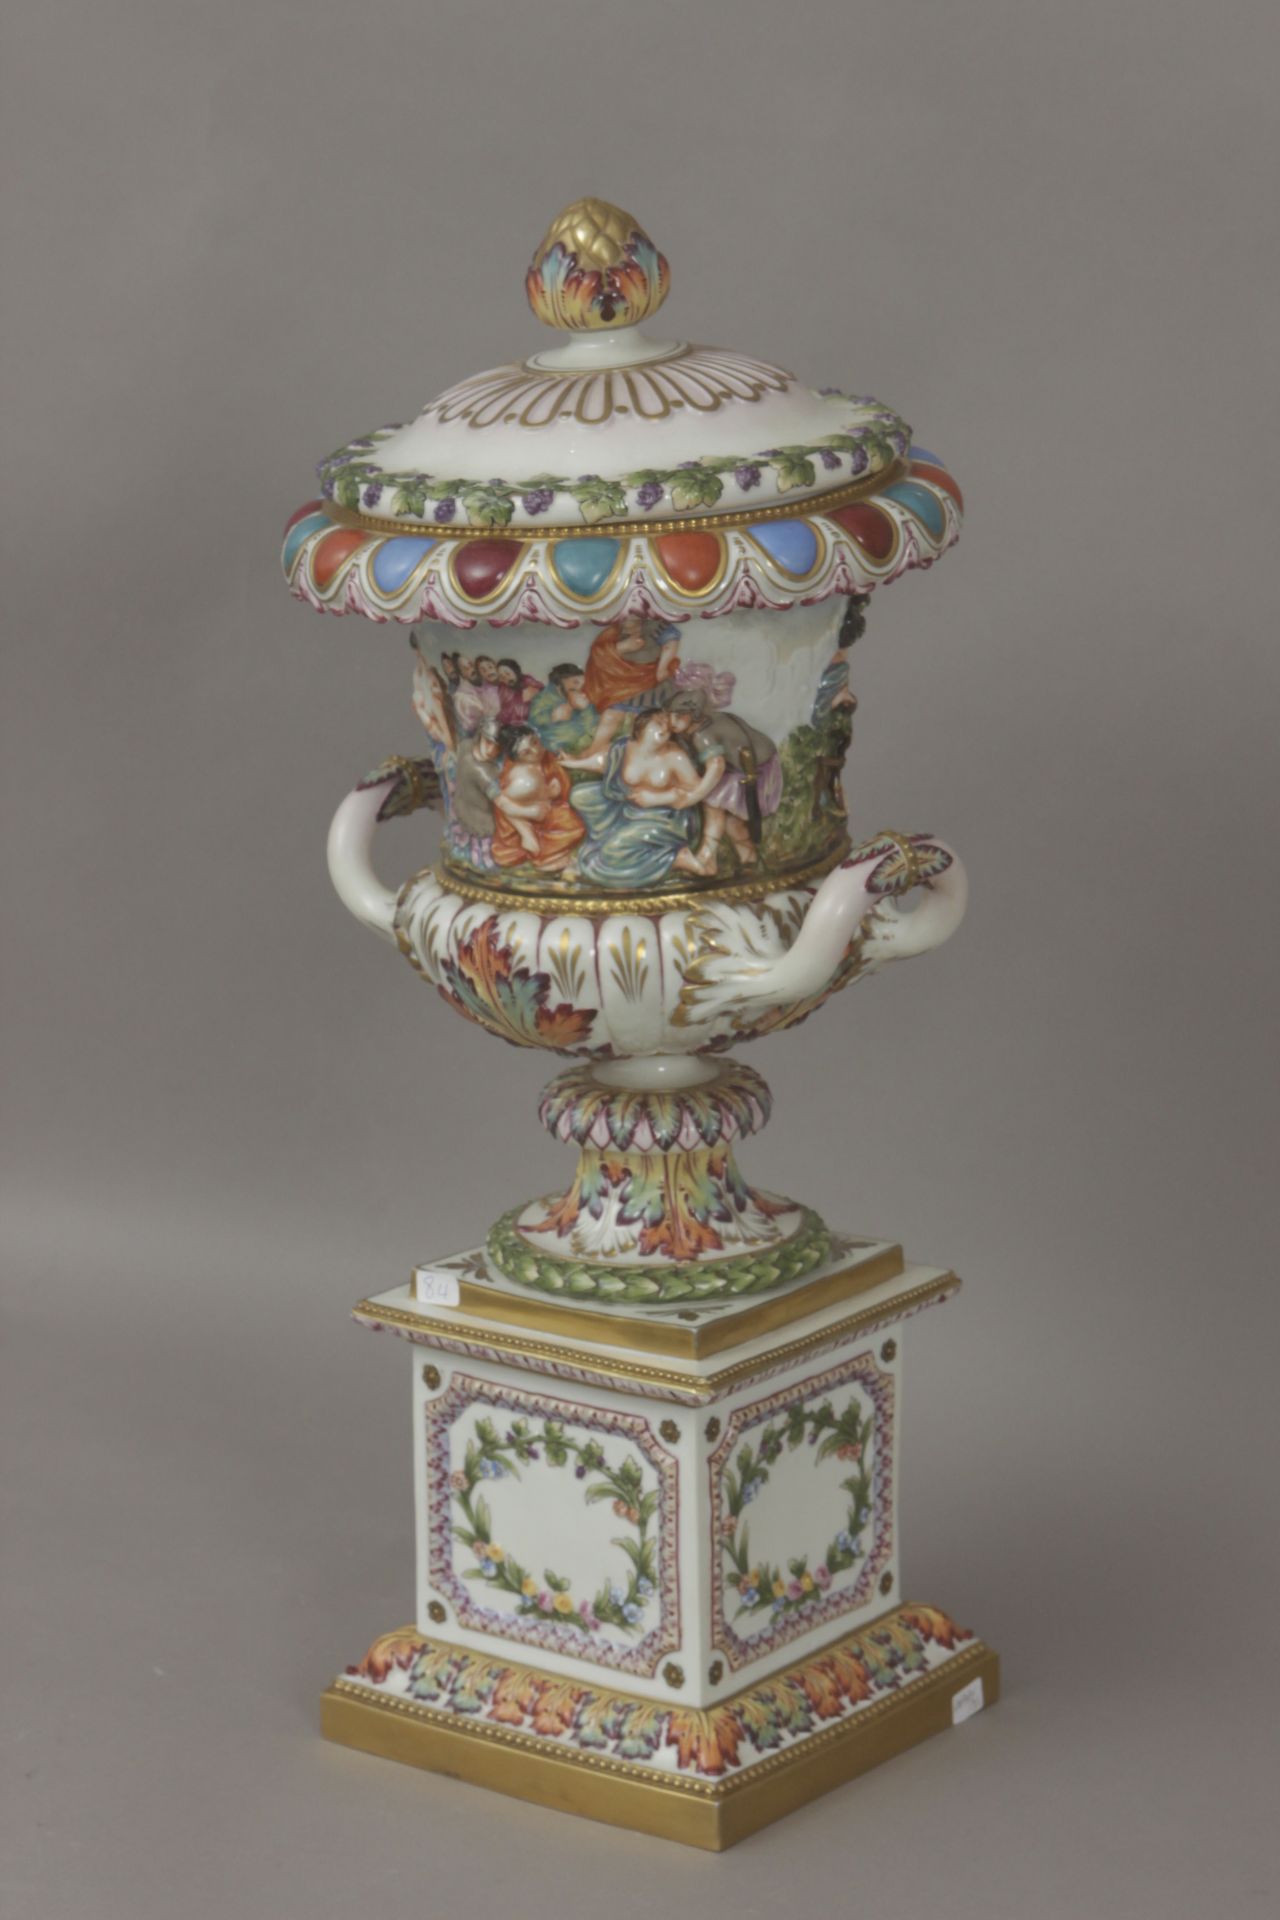 A 20th century Medici vase in Capodimonte porcelain - Image 2 of 5